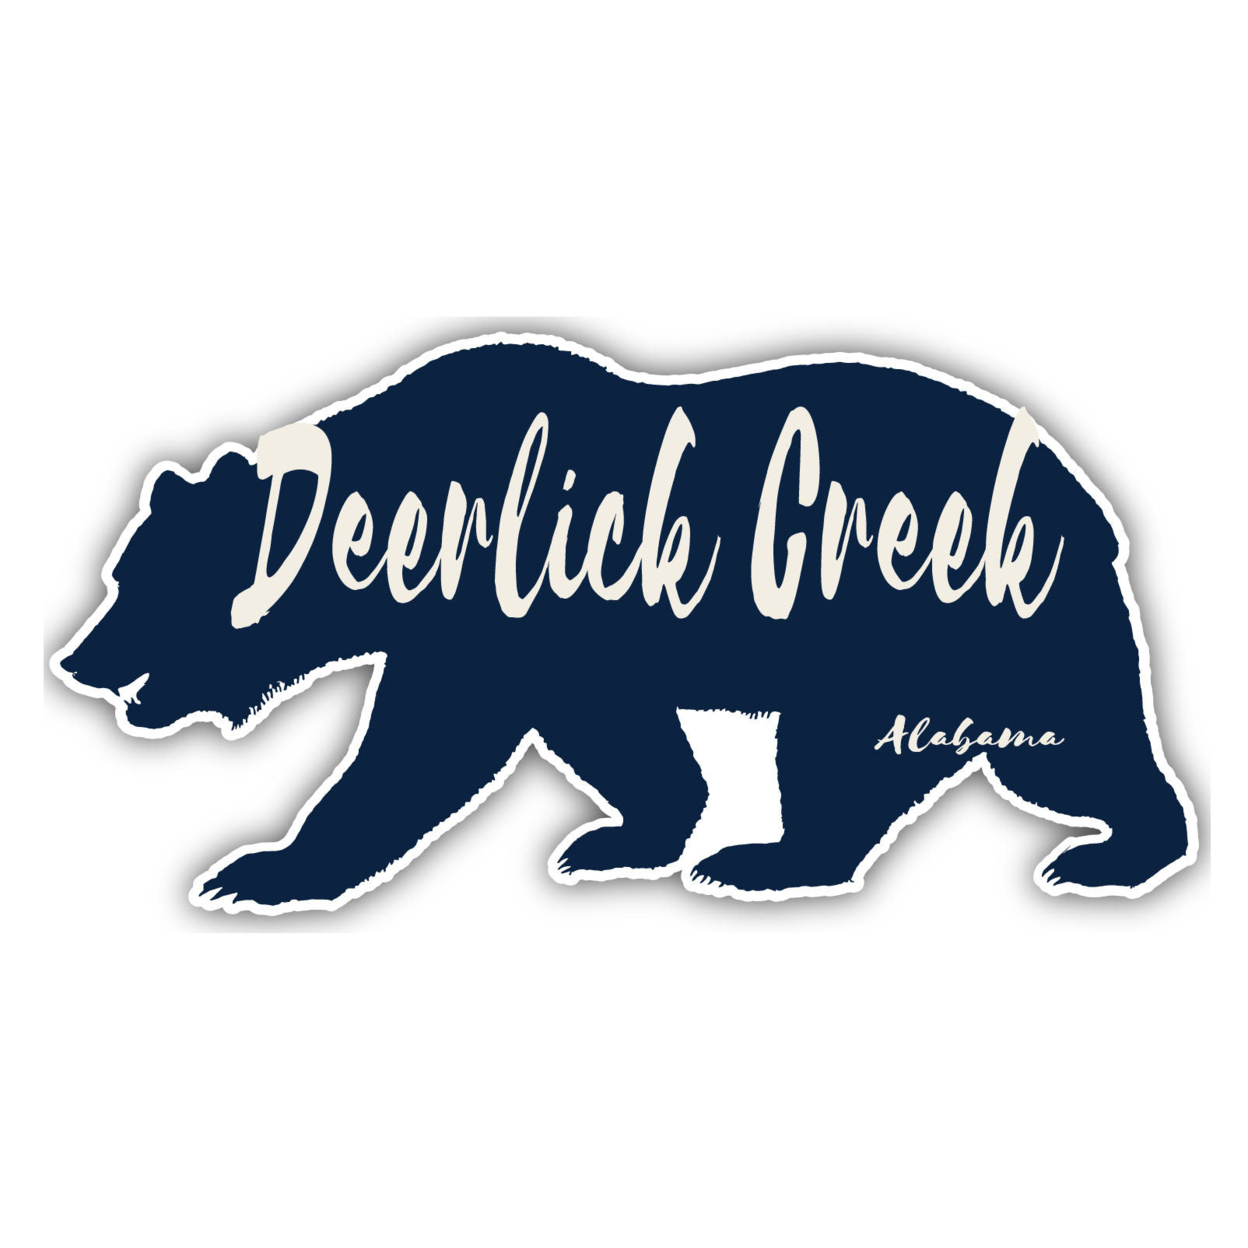 Deerlick Creek Alabama Souvenir Decorative Stickers (Choose Theme And Size) - Single Unit, 2-Inch, Adventures Awaits